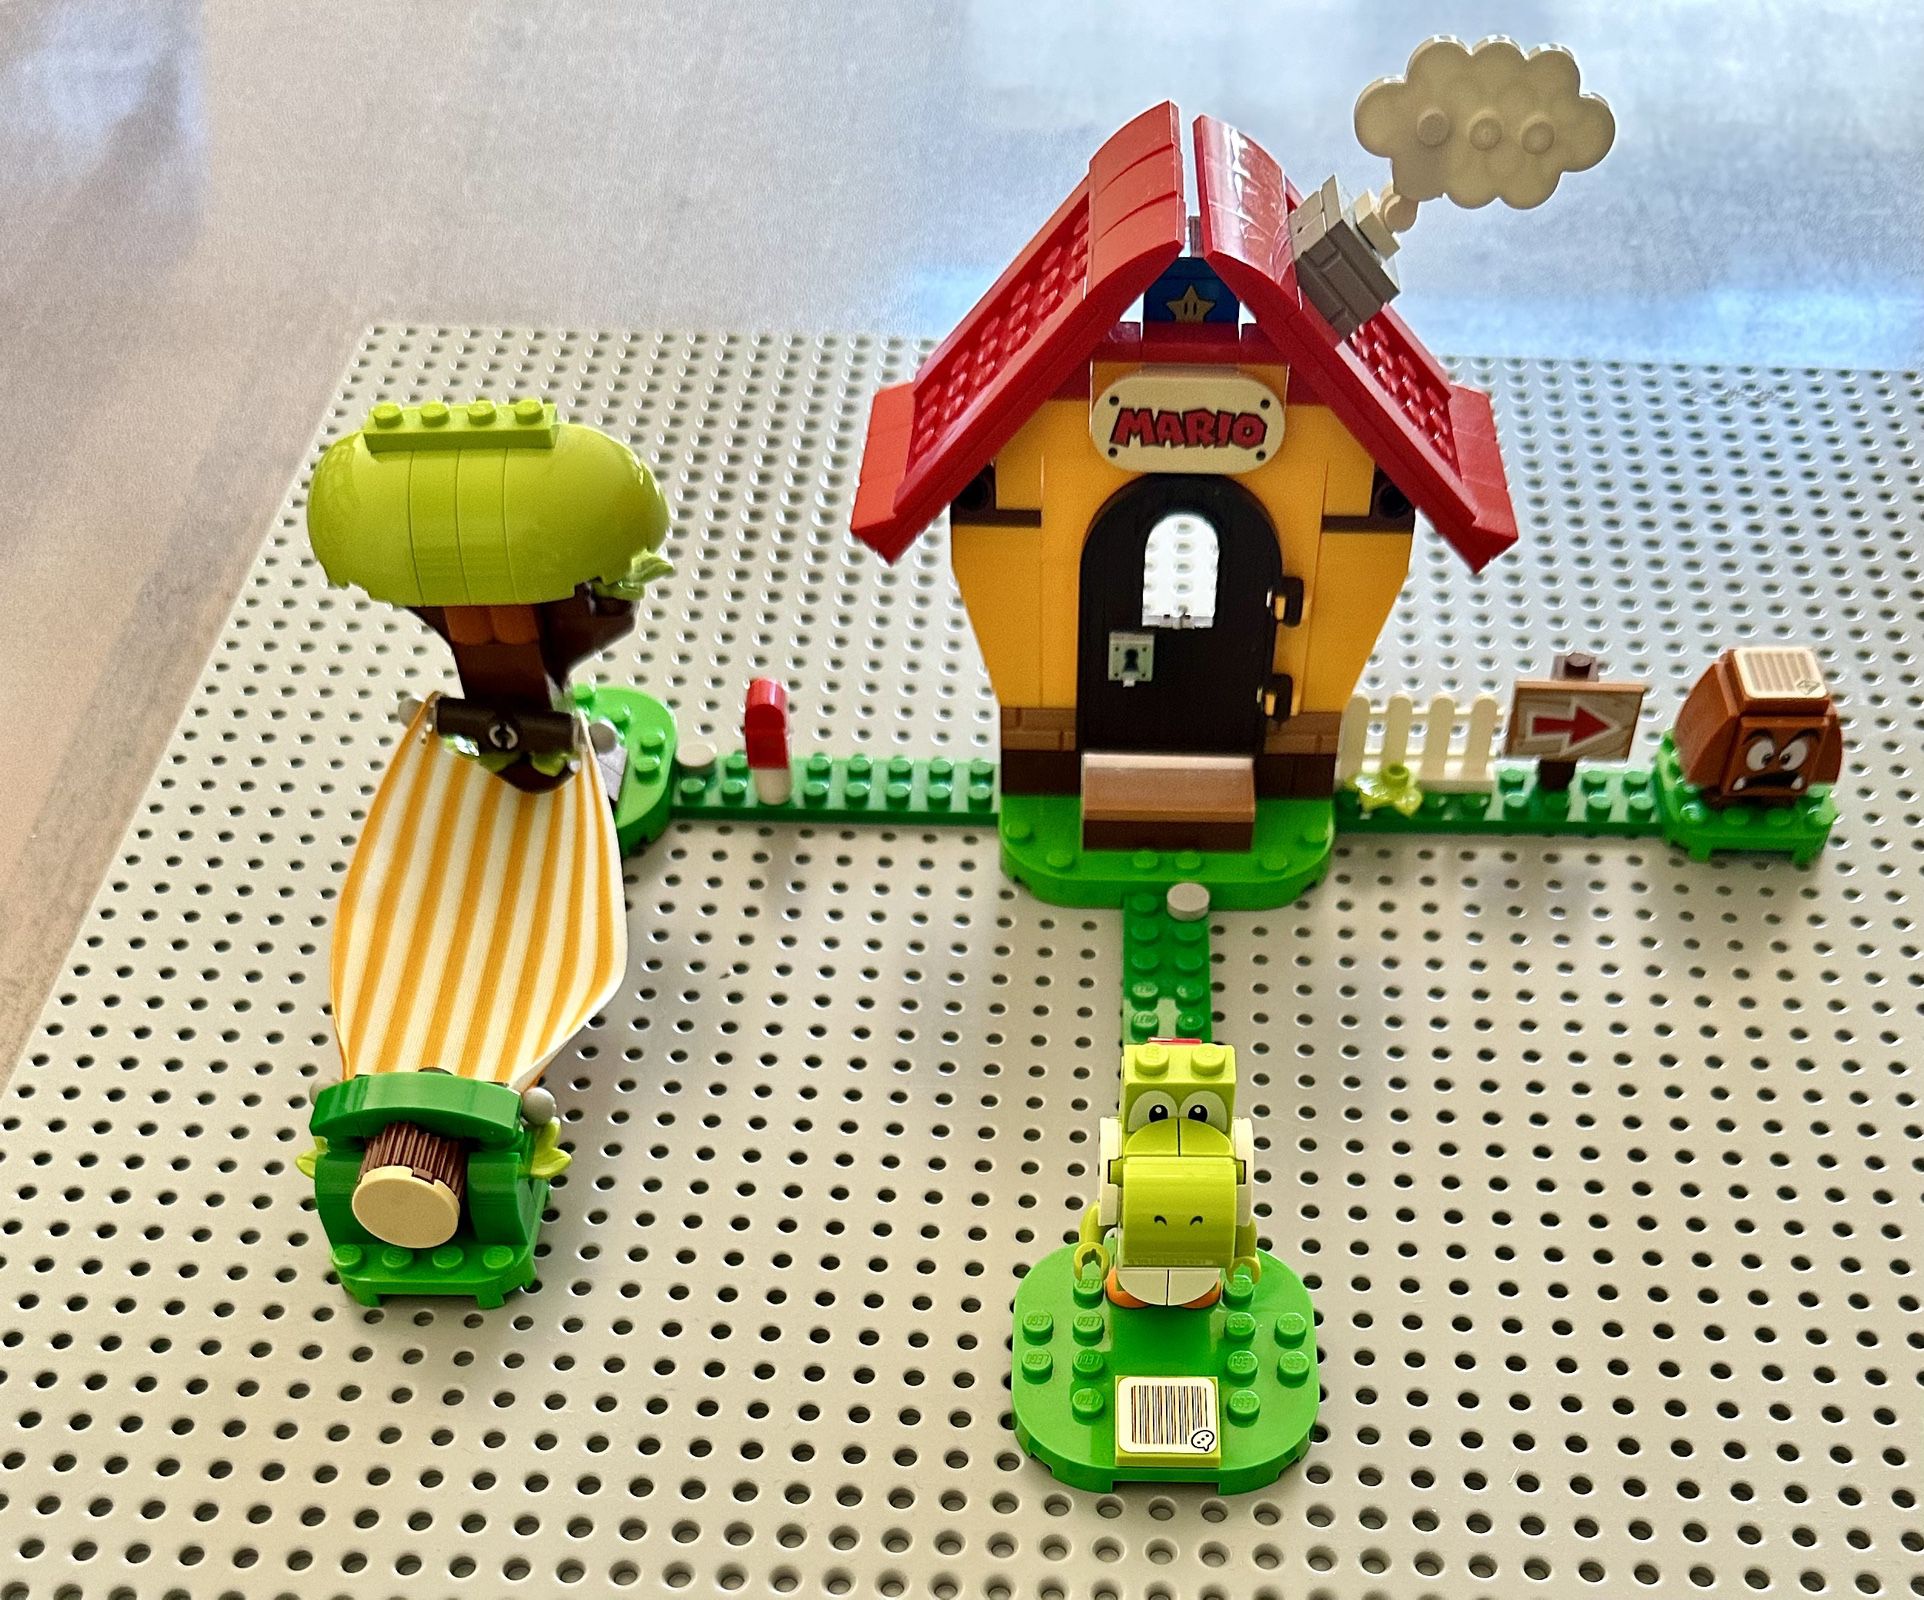 LEGO Mario’s House & Yoshi Expansion Set